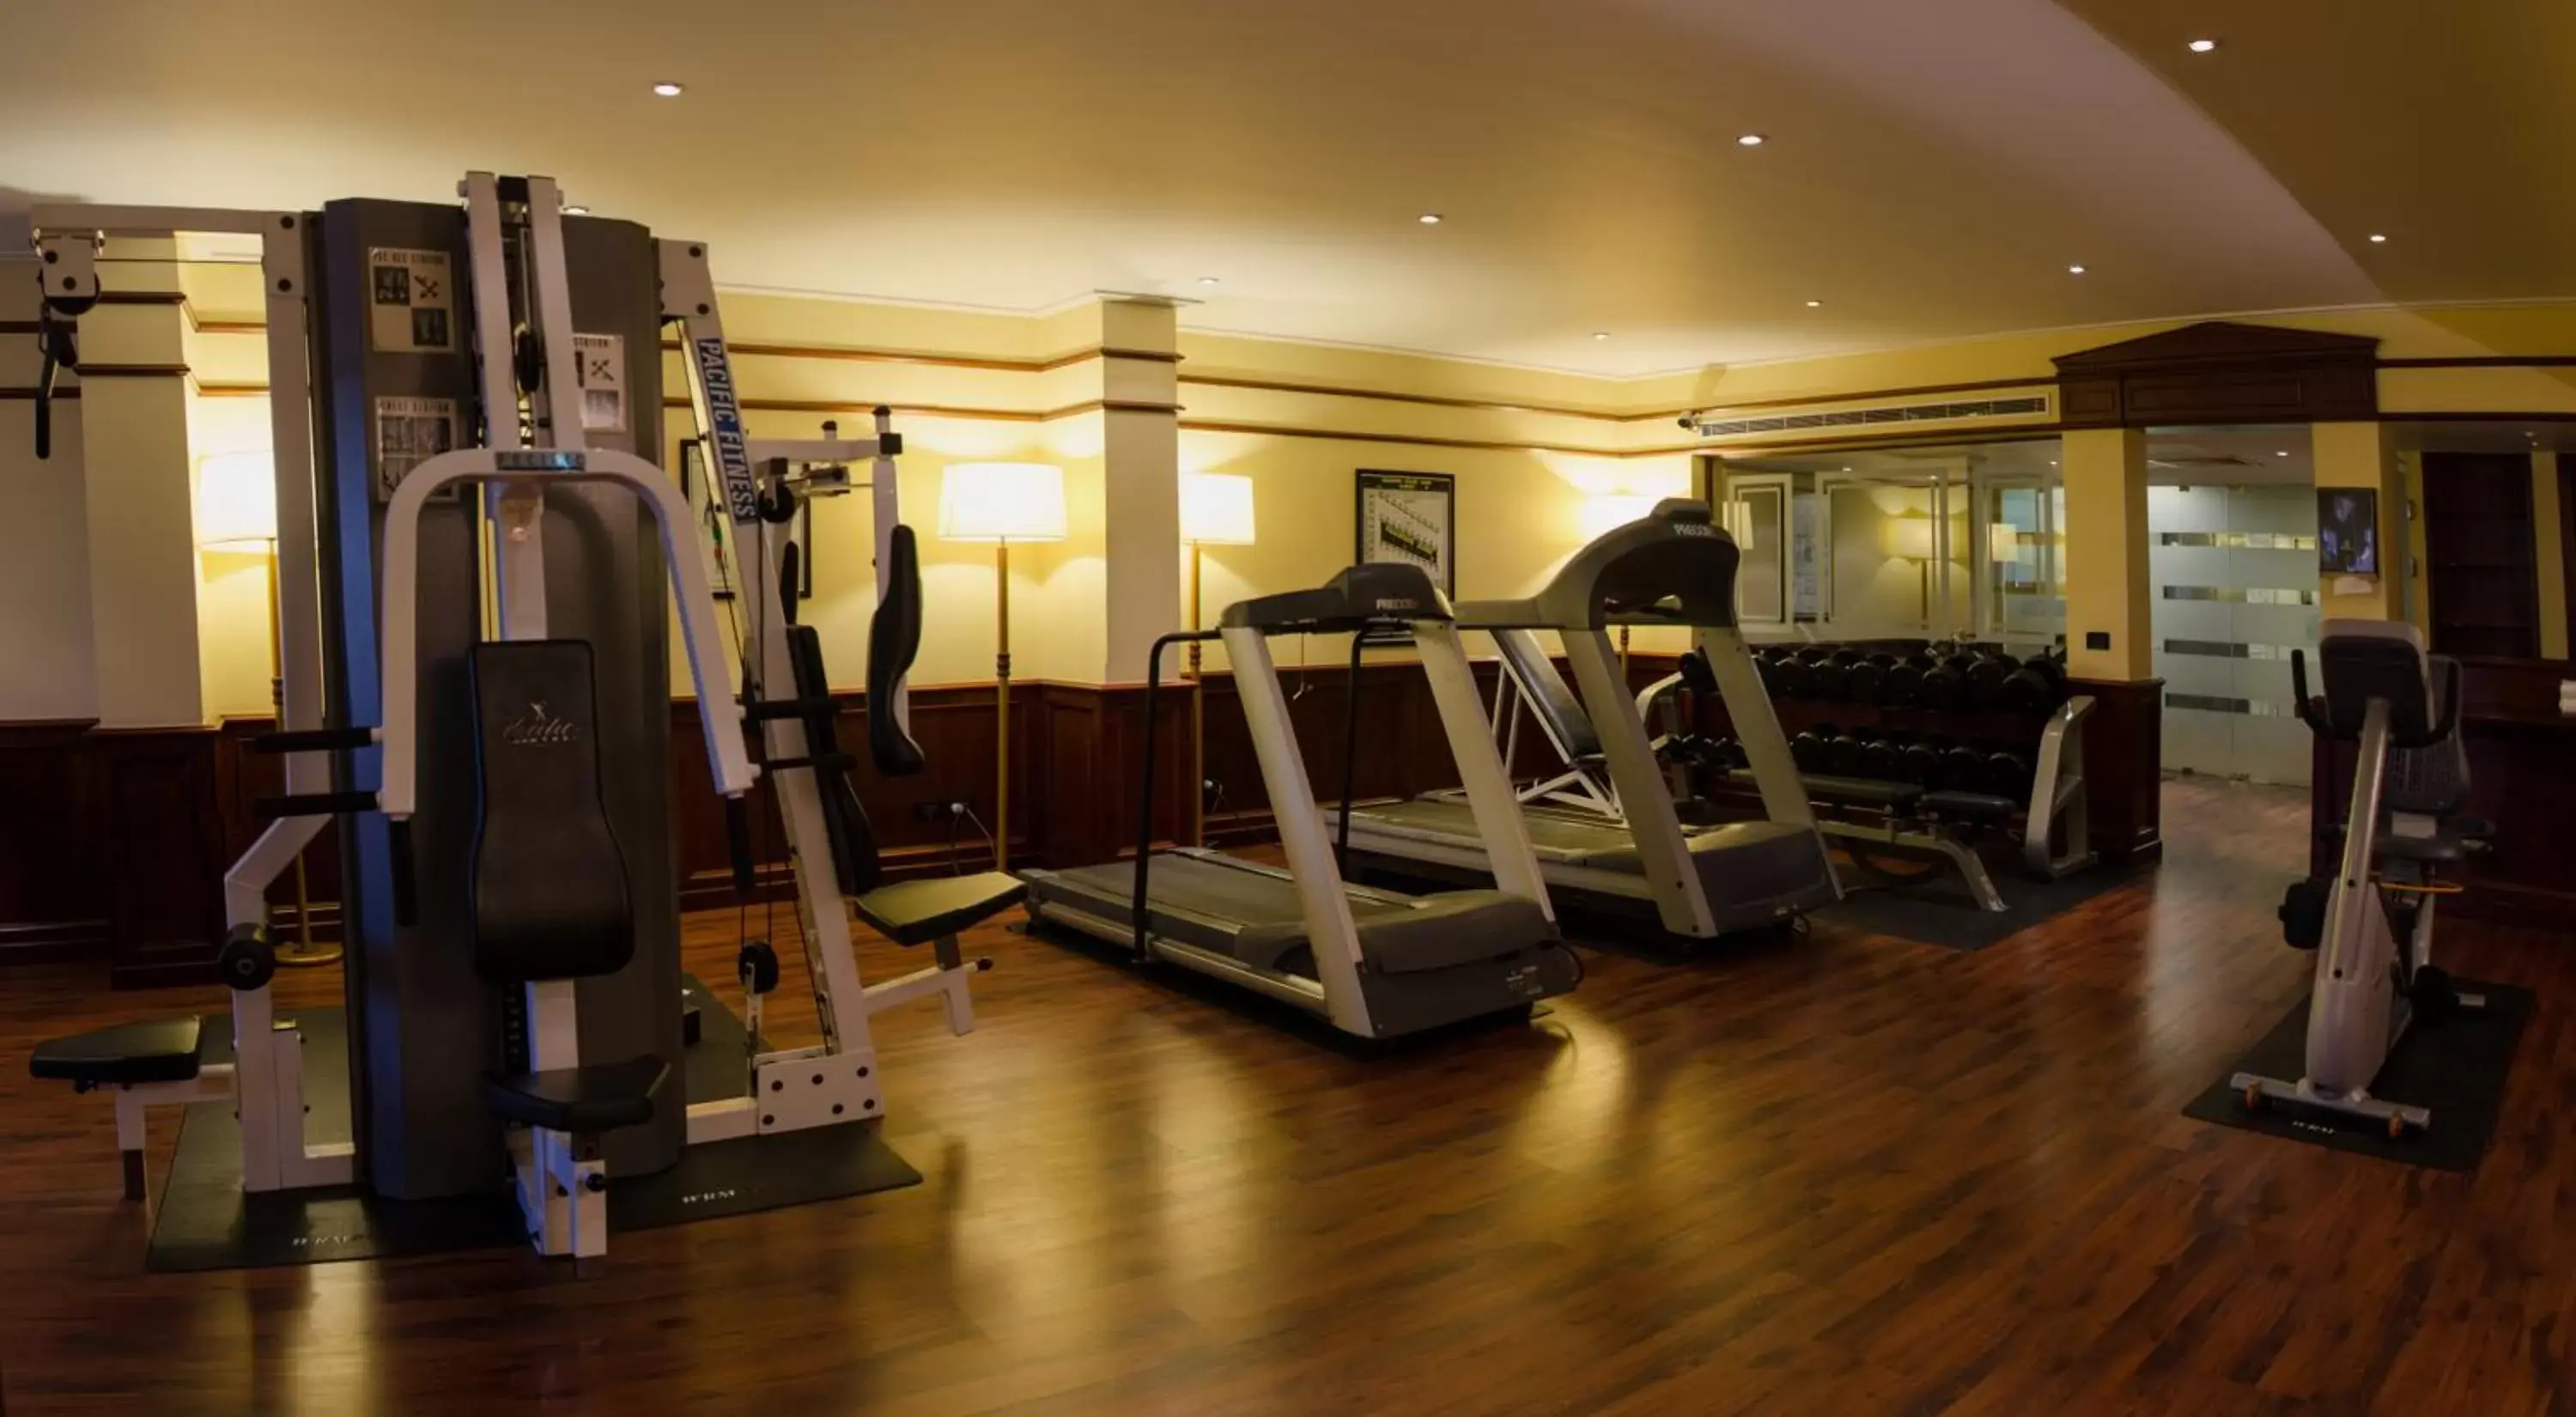 Fitness centre/facilities, Fitness Center/Facilities in Le Commodore Hotel